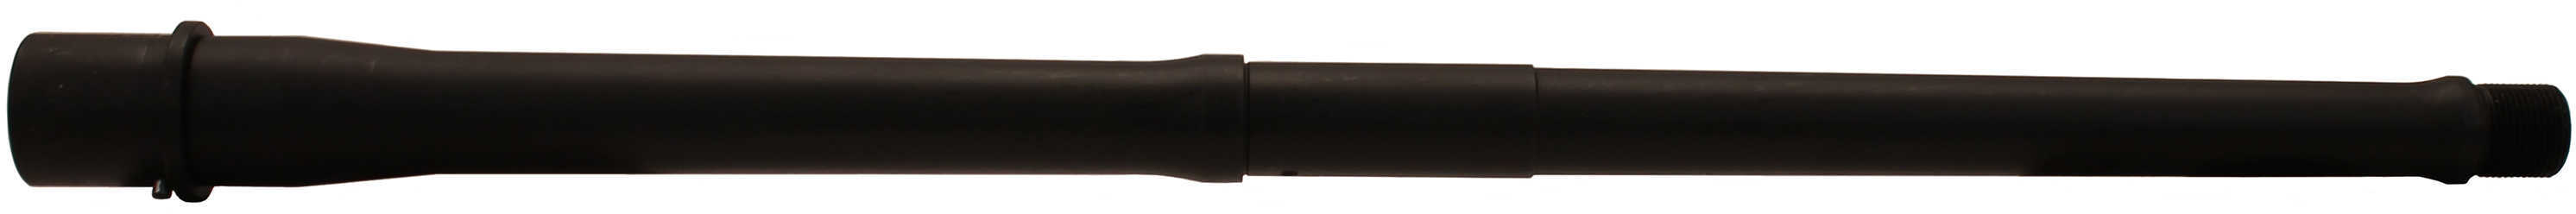 CMMG Barrel 300 AAC Blackout 16.1" 1:7 Twist Carbine 4140 CrMo Salt Bath Nitride Finish 5/8"-24 TPI 30D120A